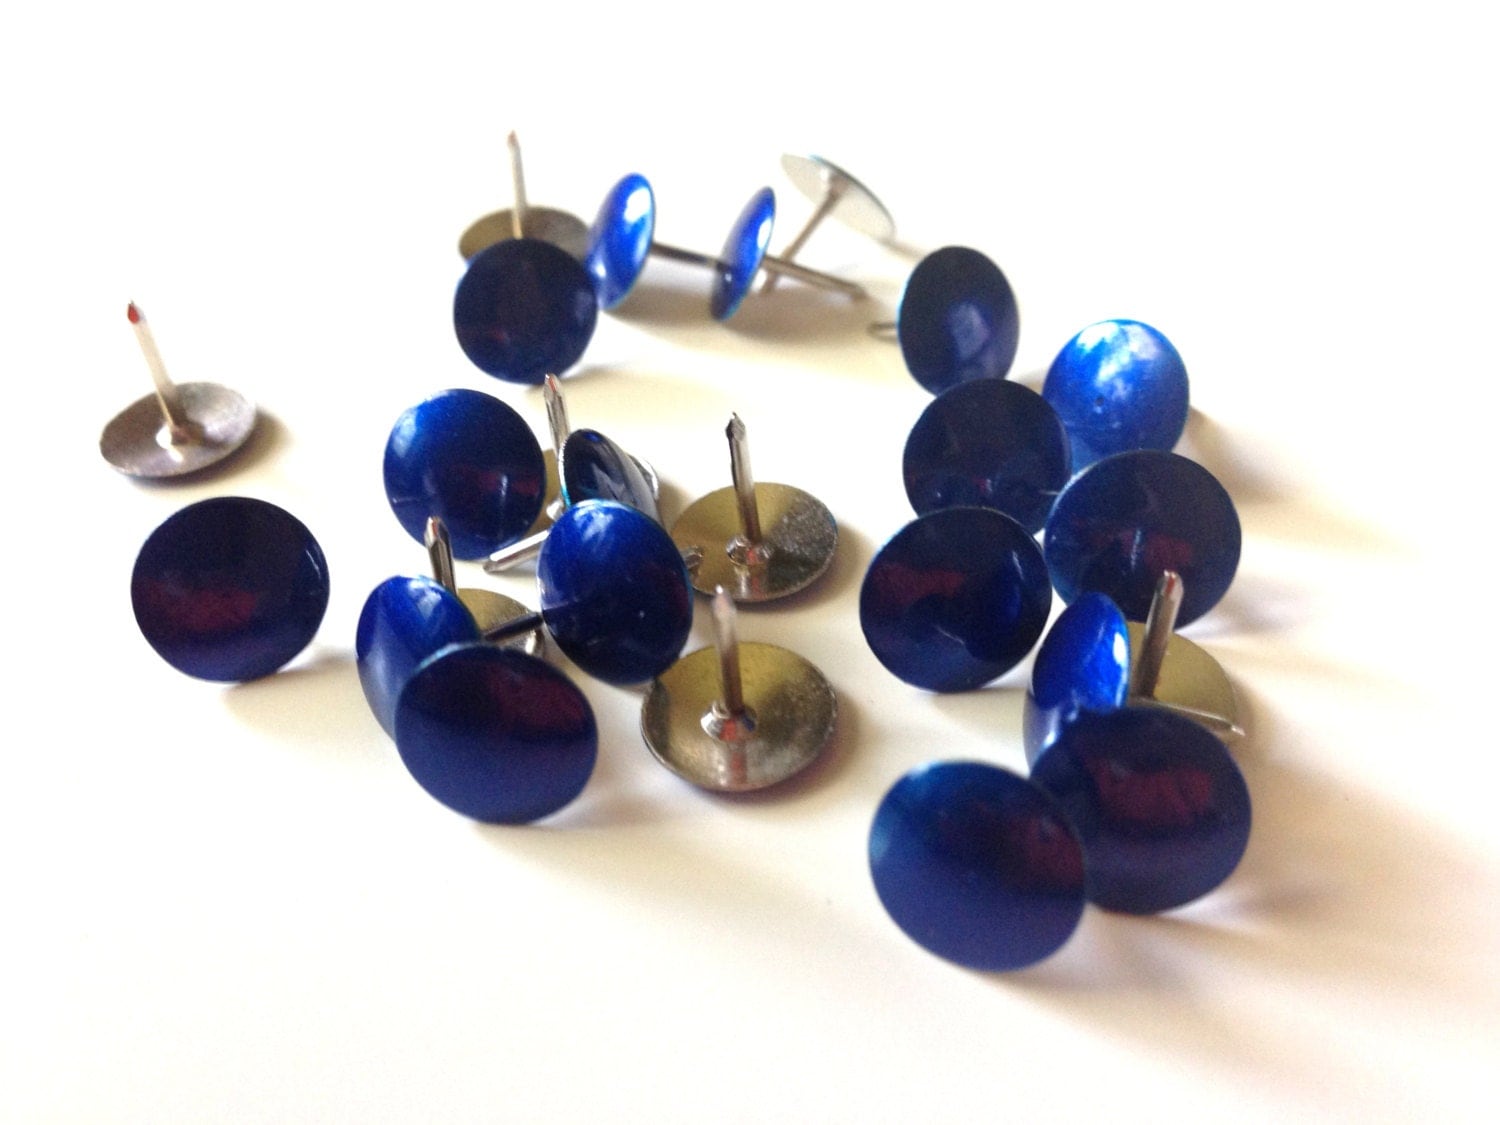 Blue Thumb Tacks Decorative Push Pins Pretty Thumbtacks By Rejunk